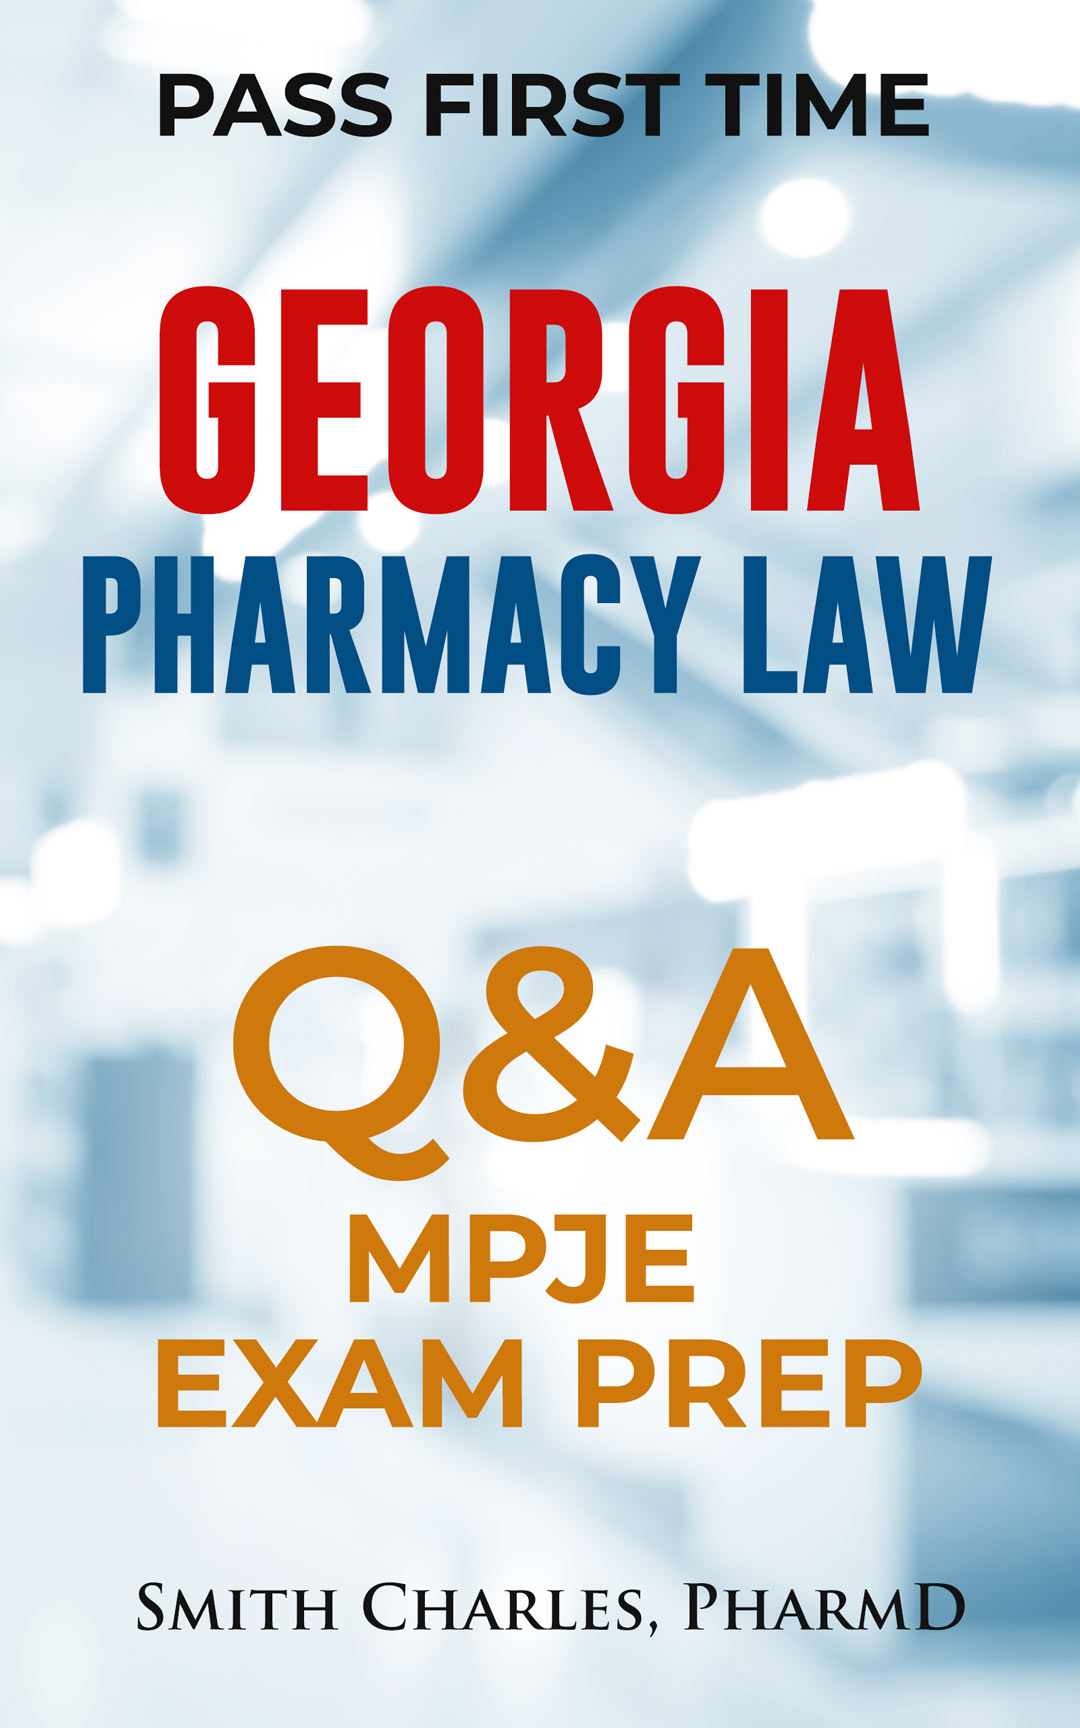 Georgia Pharmacy Law MPJE Exam Prep Q & A